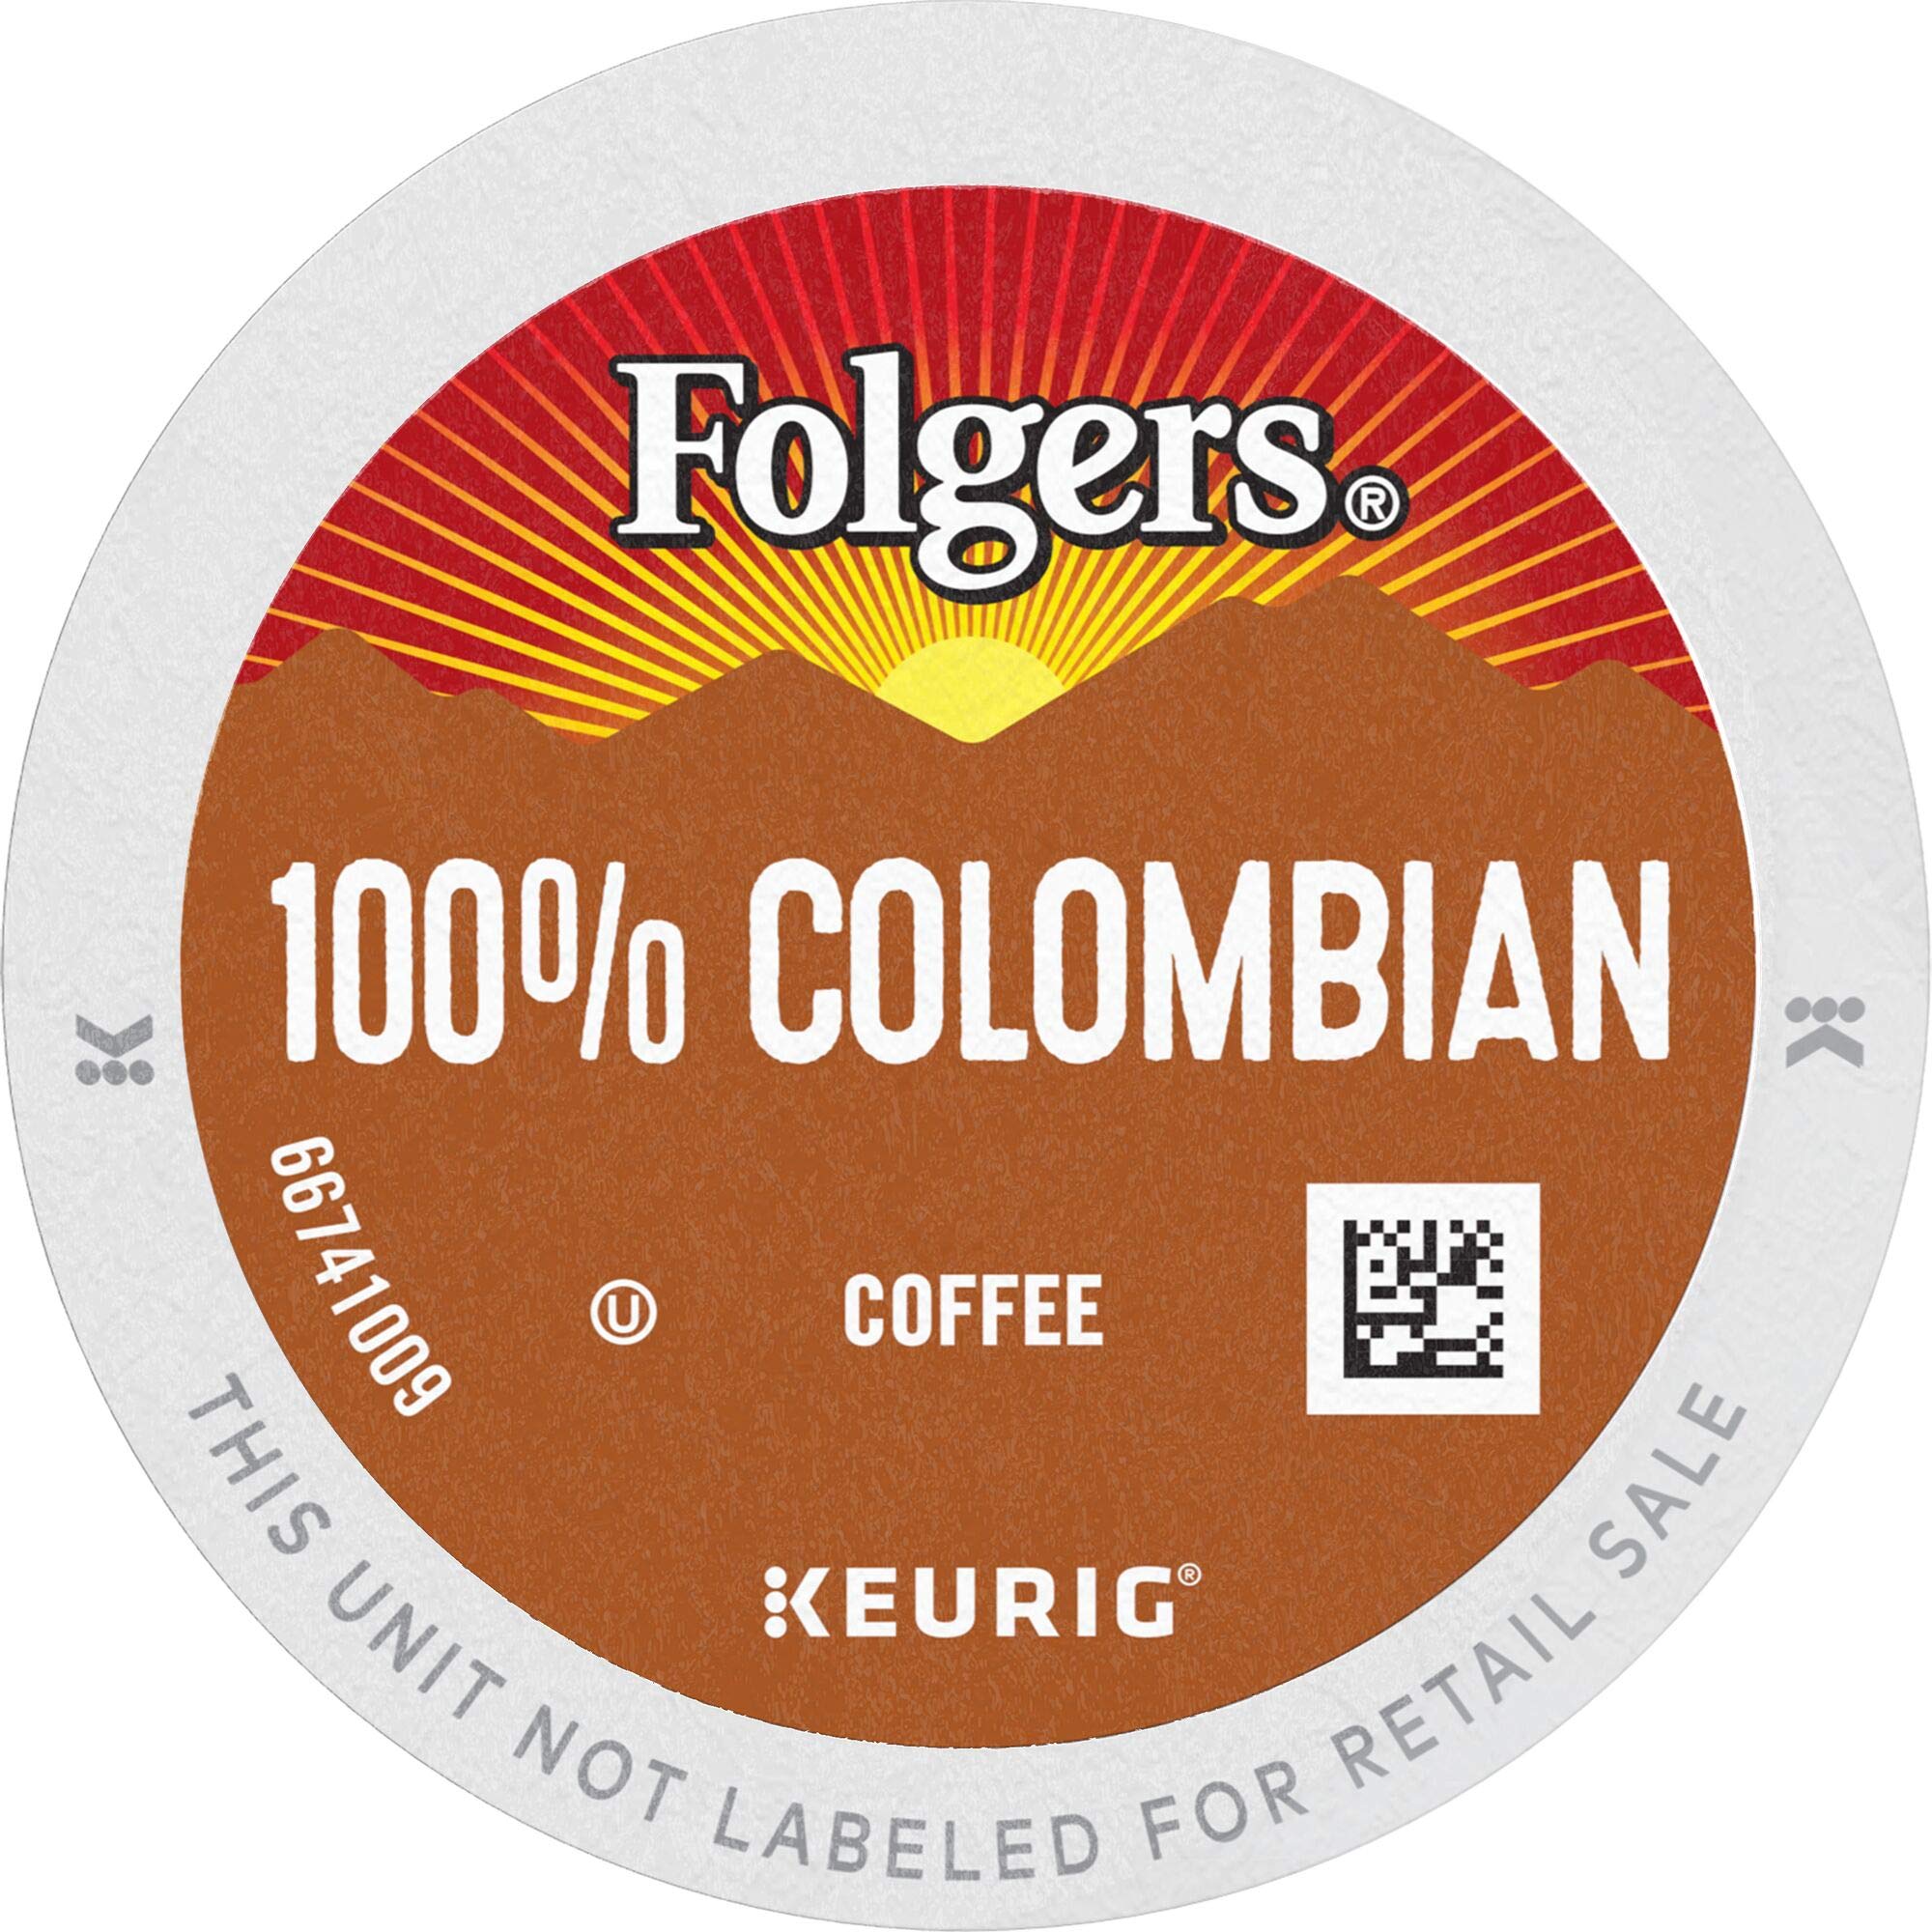 FOLGERS K CUPS Folgers 100% Colombian Medium Roast Coffee, 96 Keurig K-Cup Pods